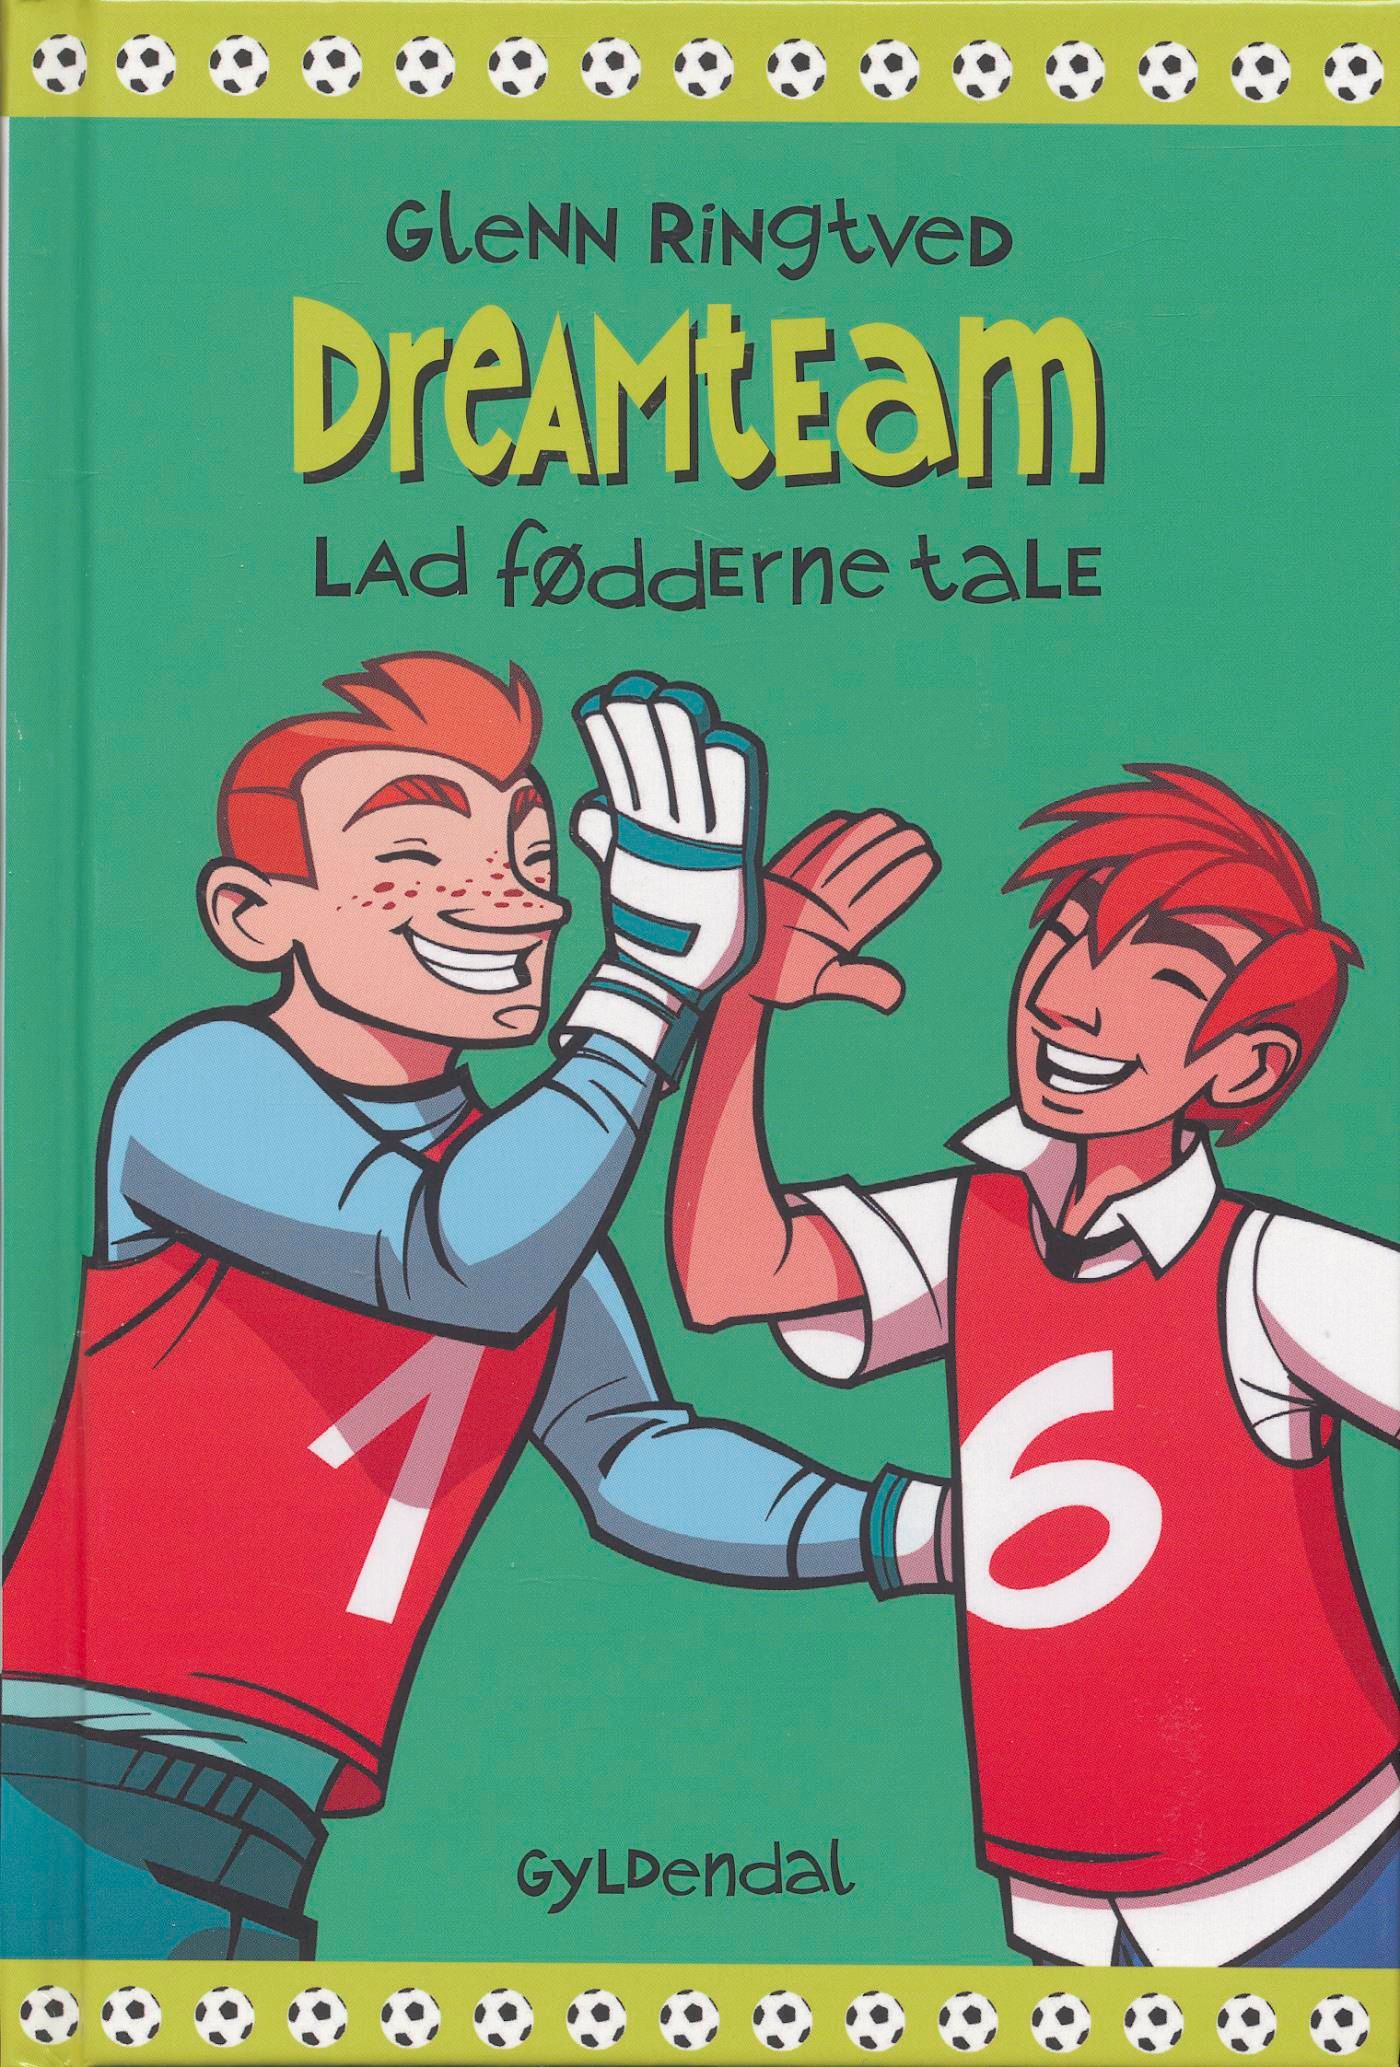 Lad fødderne tale (Dreamteam 2), eBook by Glenn Ringtved